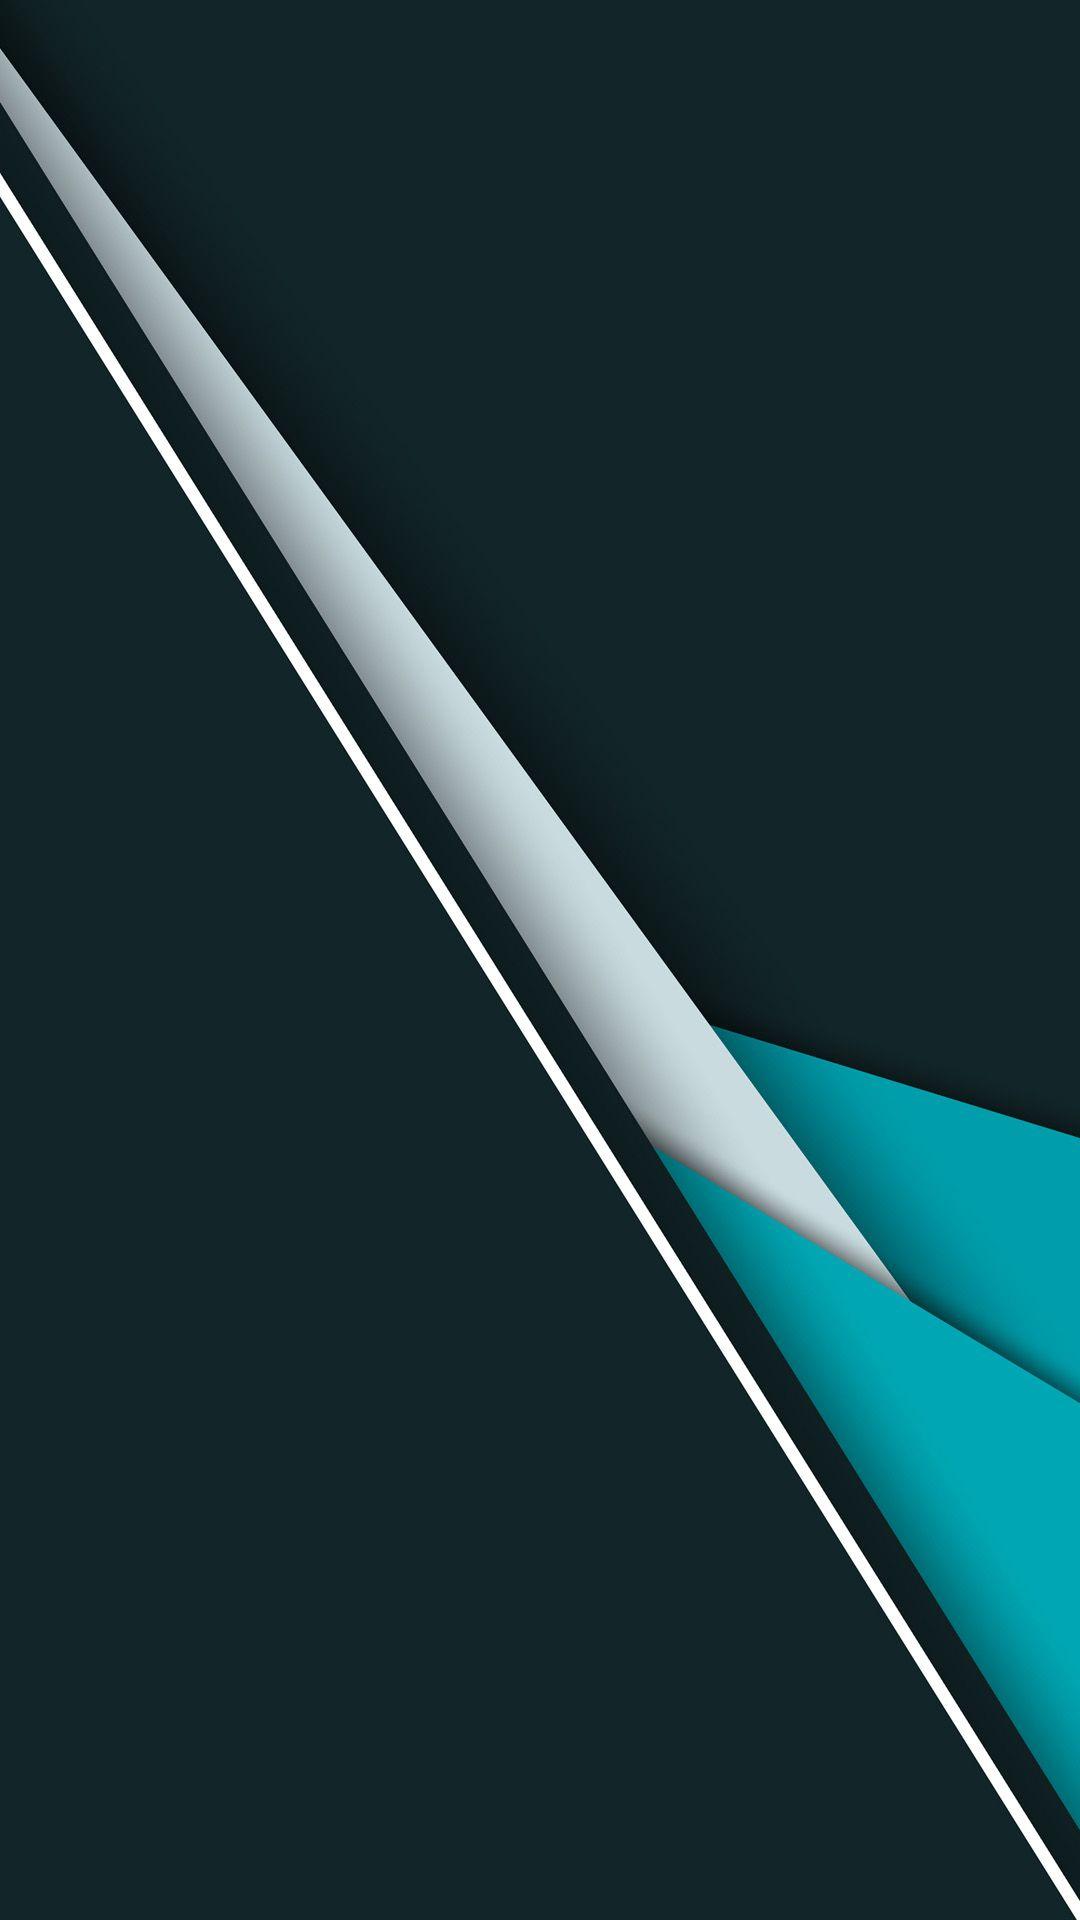 Elegant geometric Art Android wallpaper .androidhdwallpaper.com